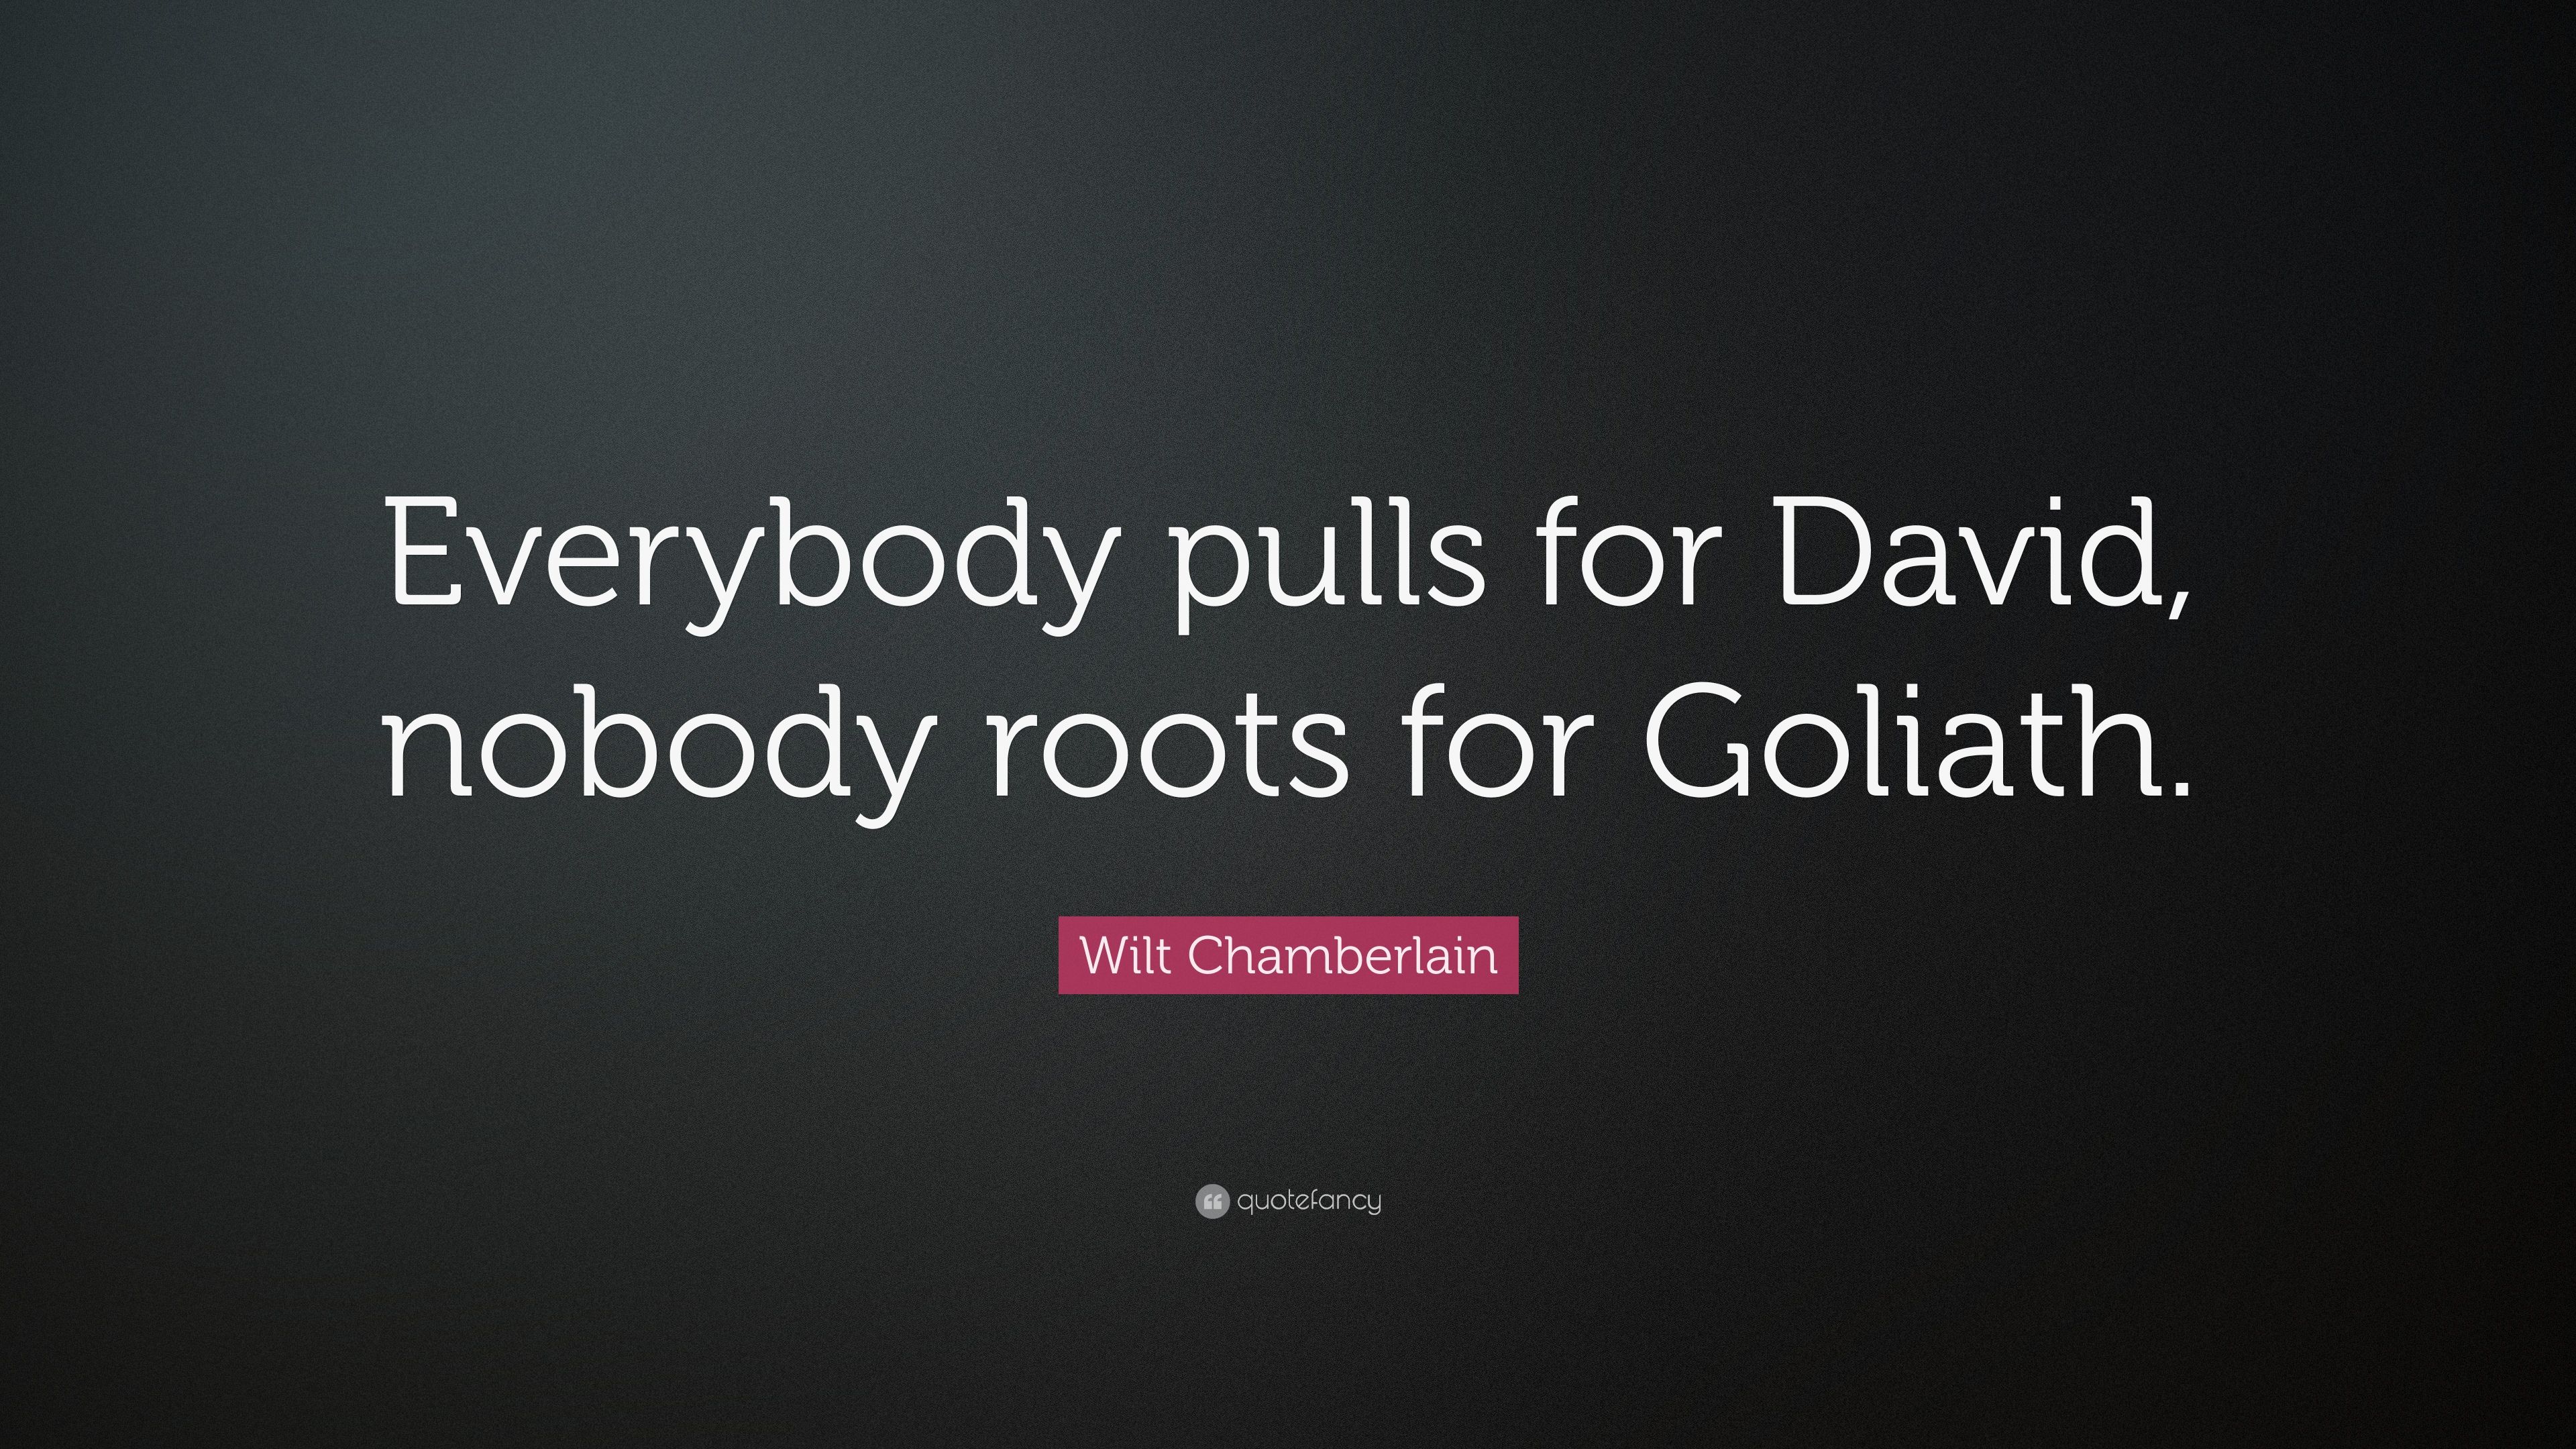 Wilt Chamberlain Quotes (34 wallpaper)